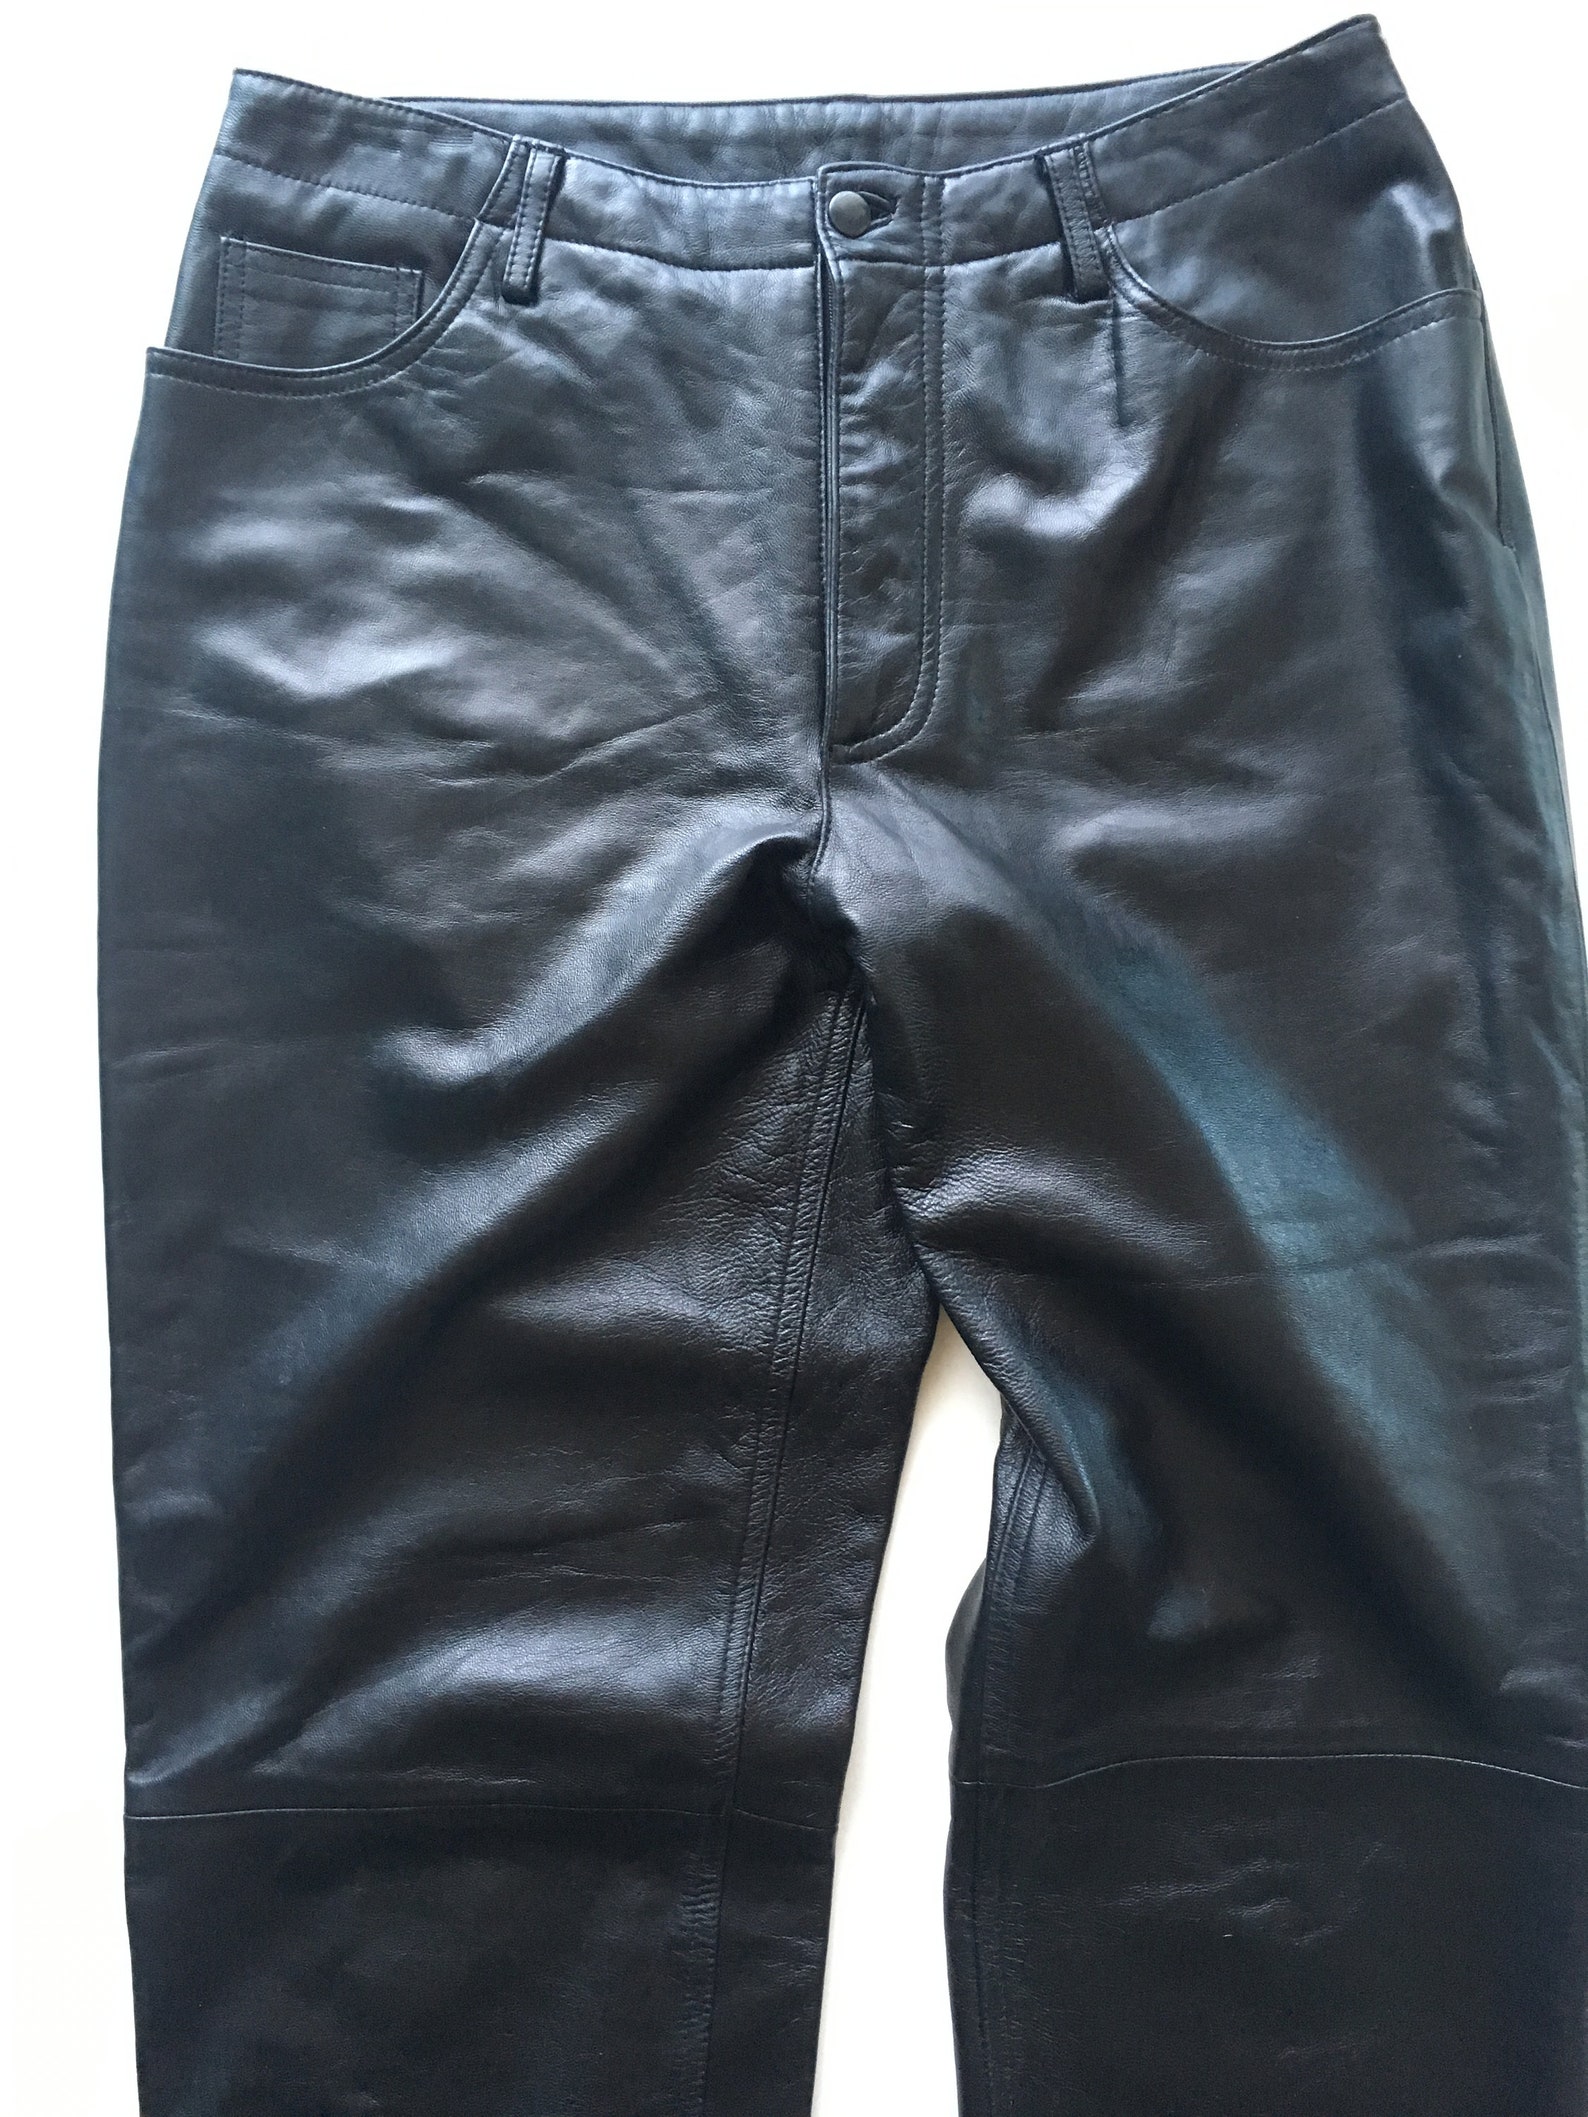 Black Leather Pants Marisa Christina Size 31 / 10 Petite - Etsy